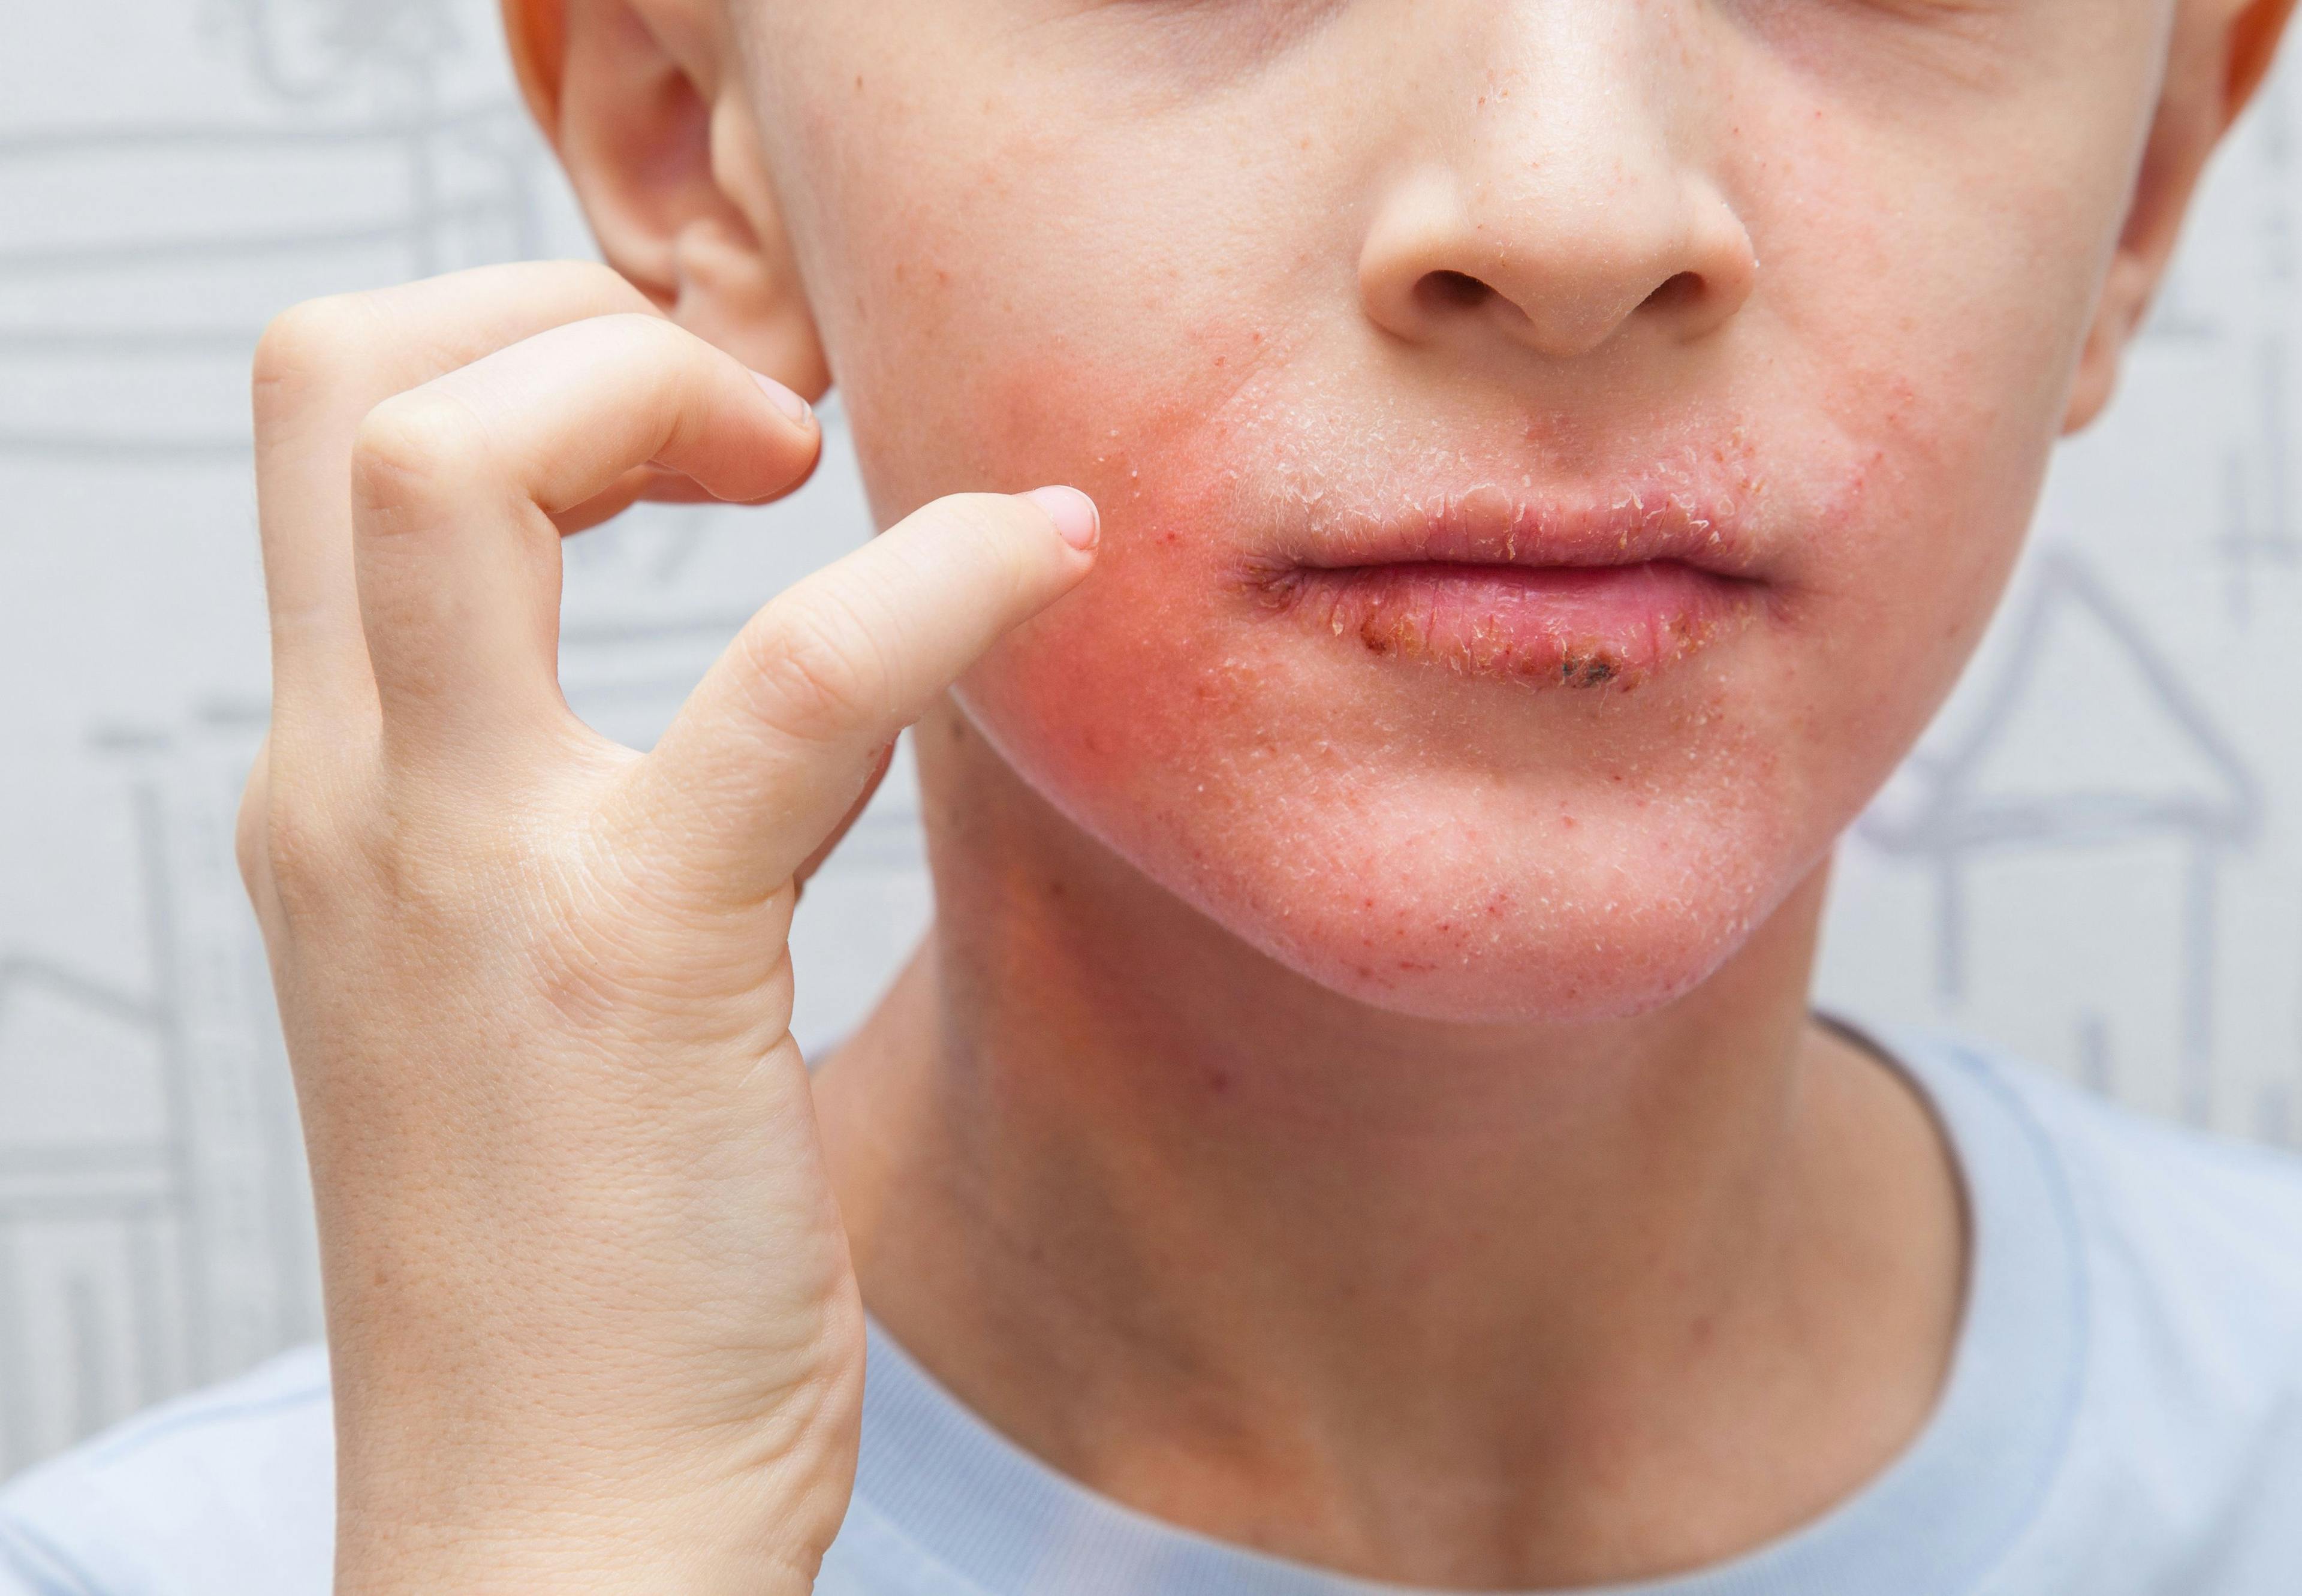 atopic dermatitis in children